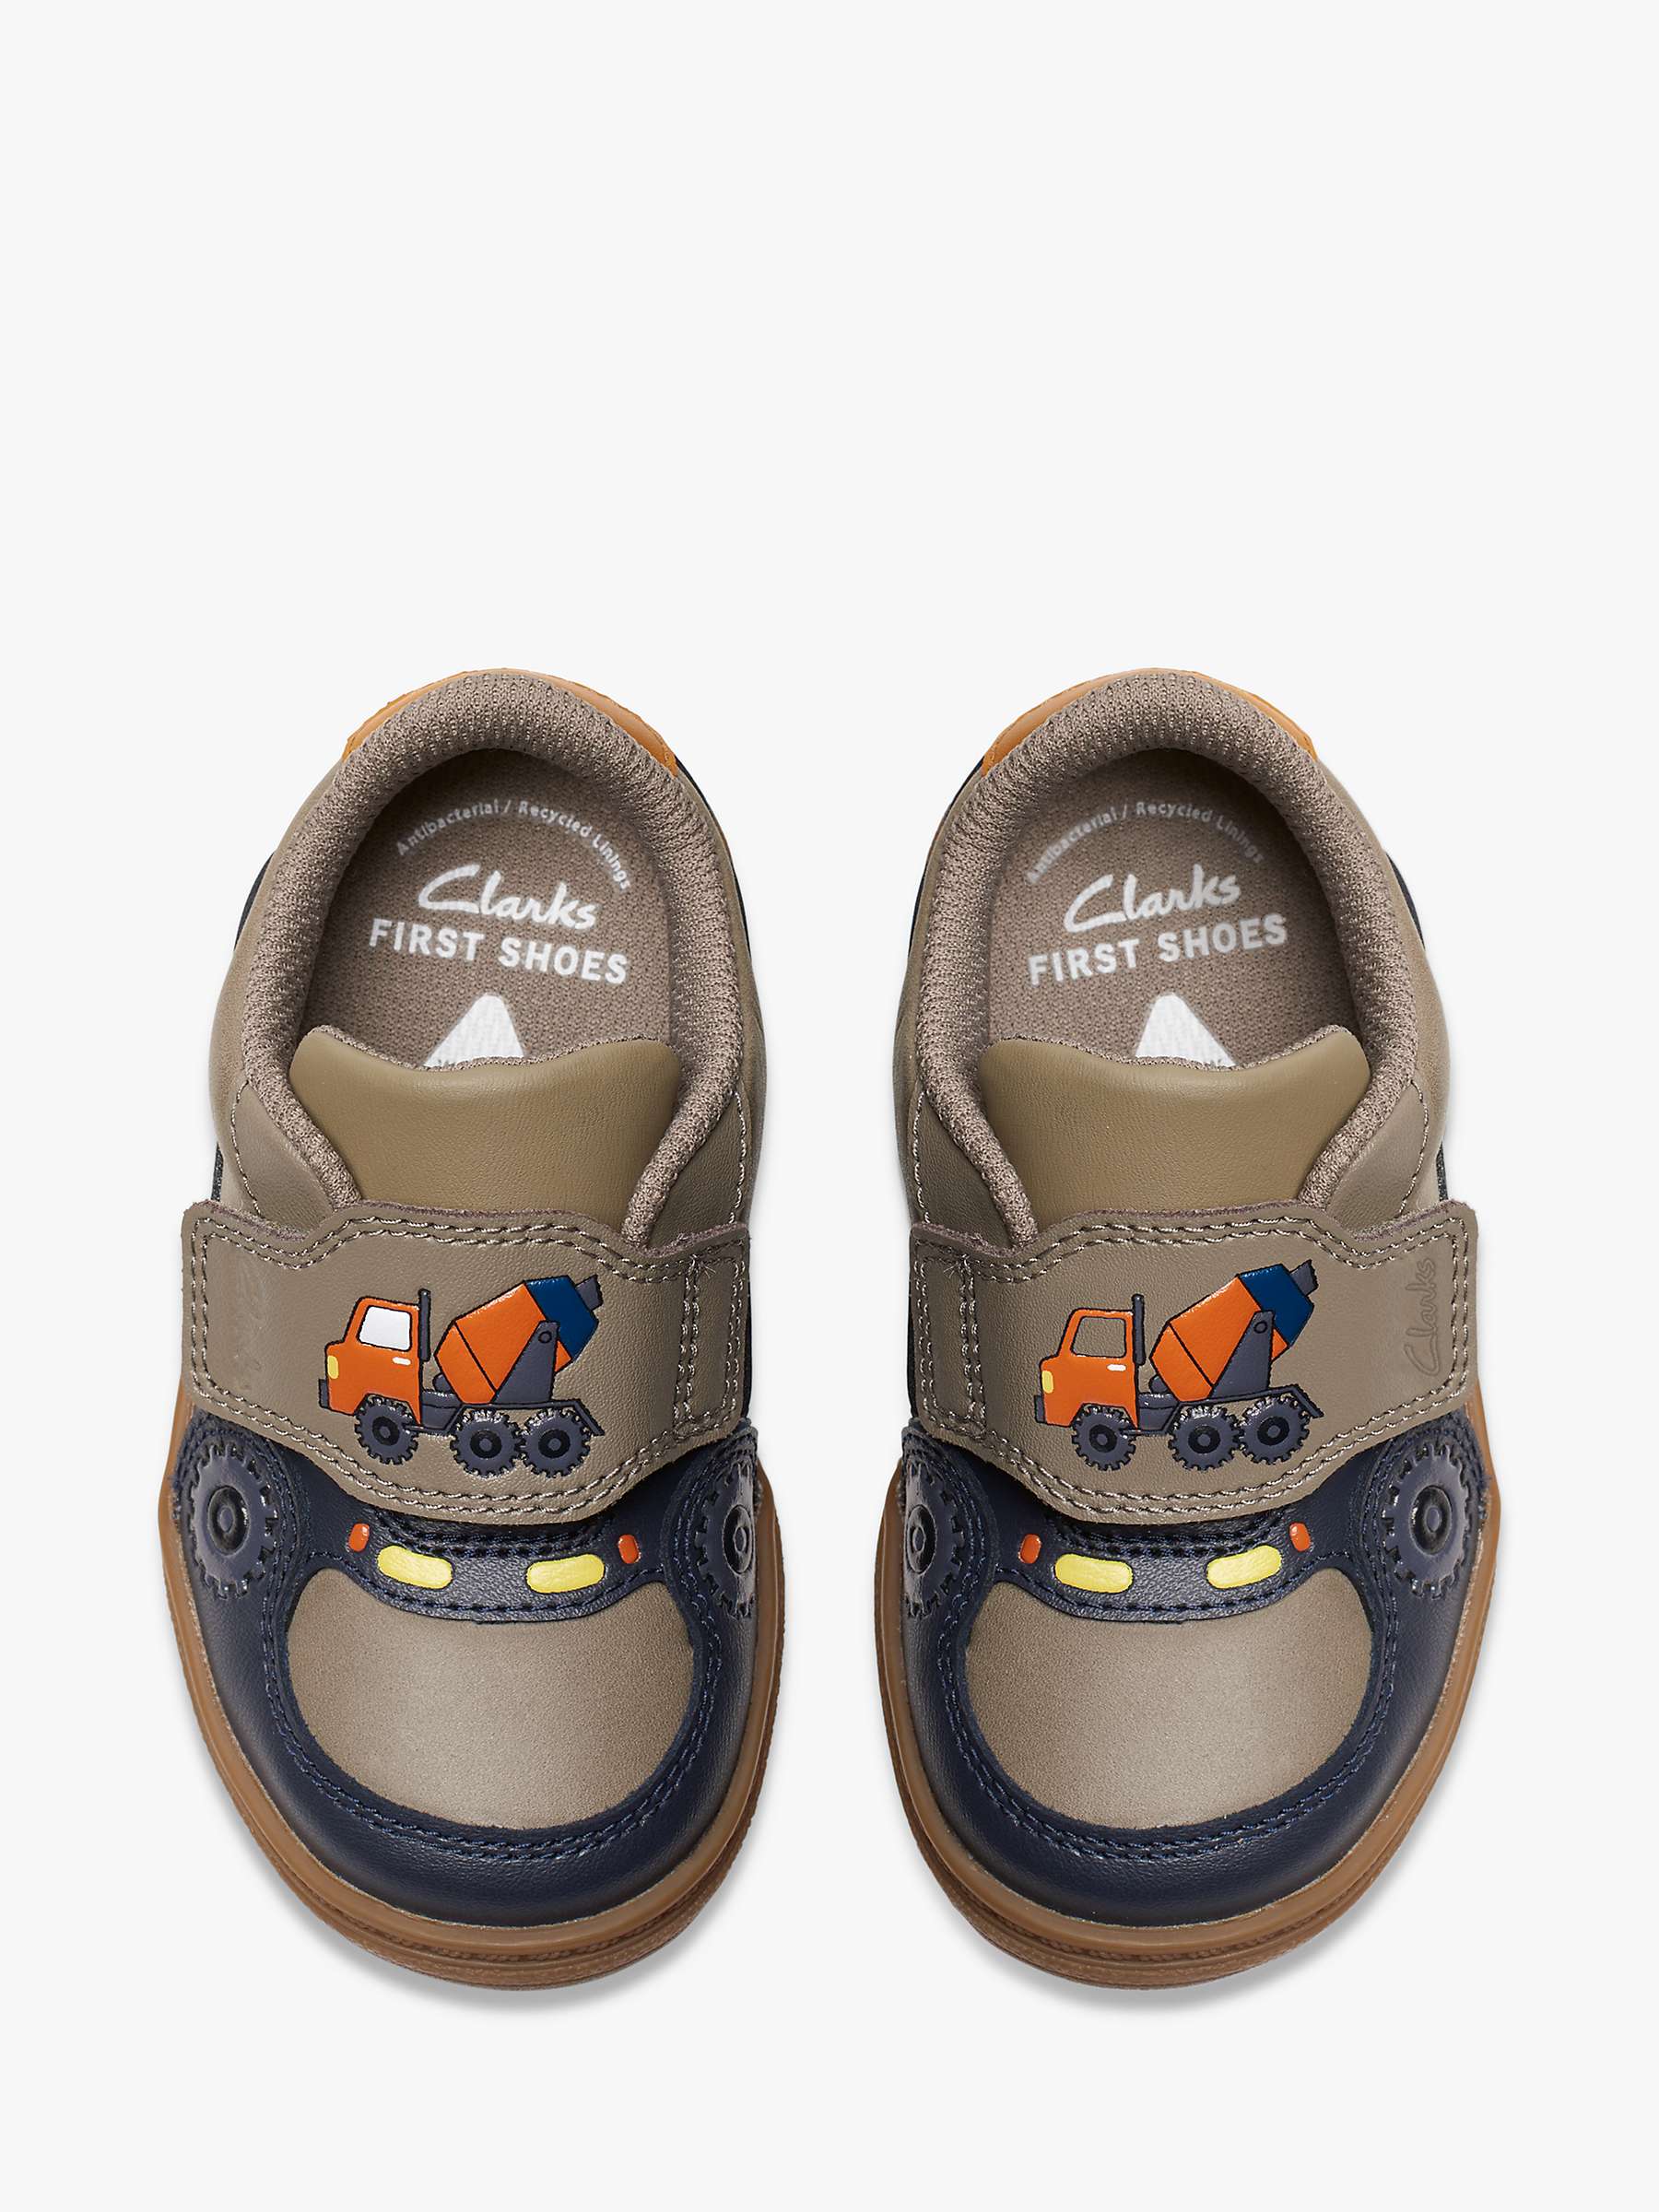 Buy Clarks Kids' Flash Beep Shoes, Sage/Multi Online at johnlewis.com